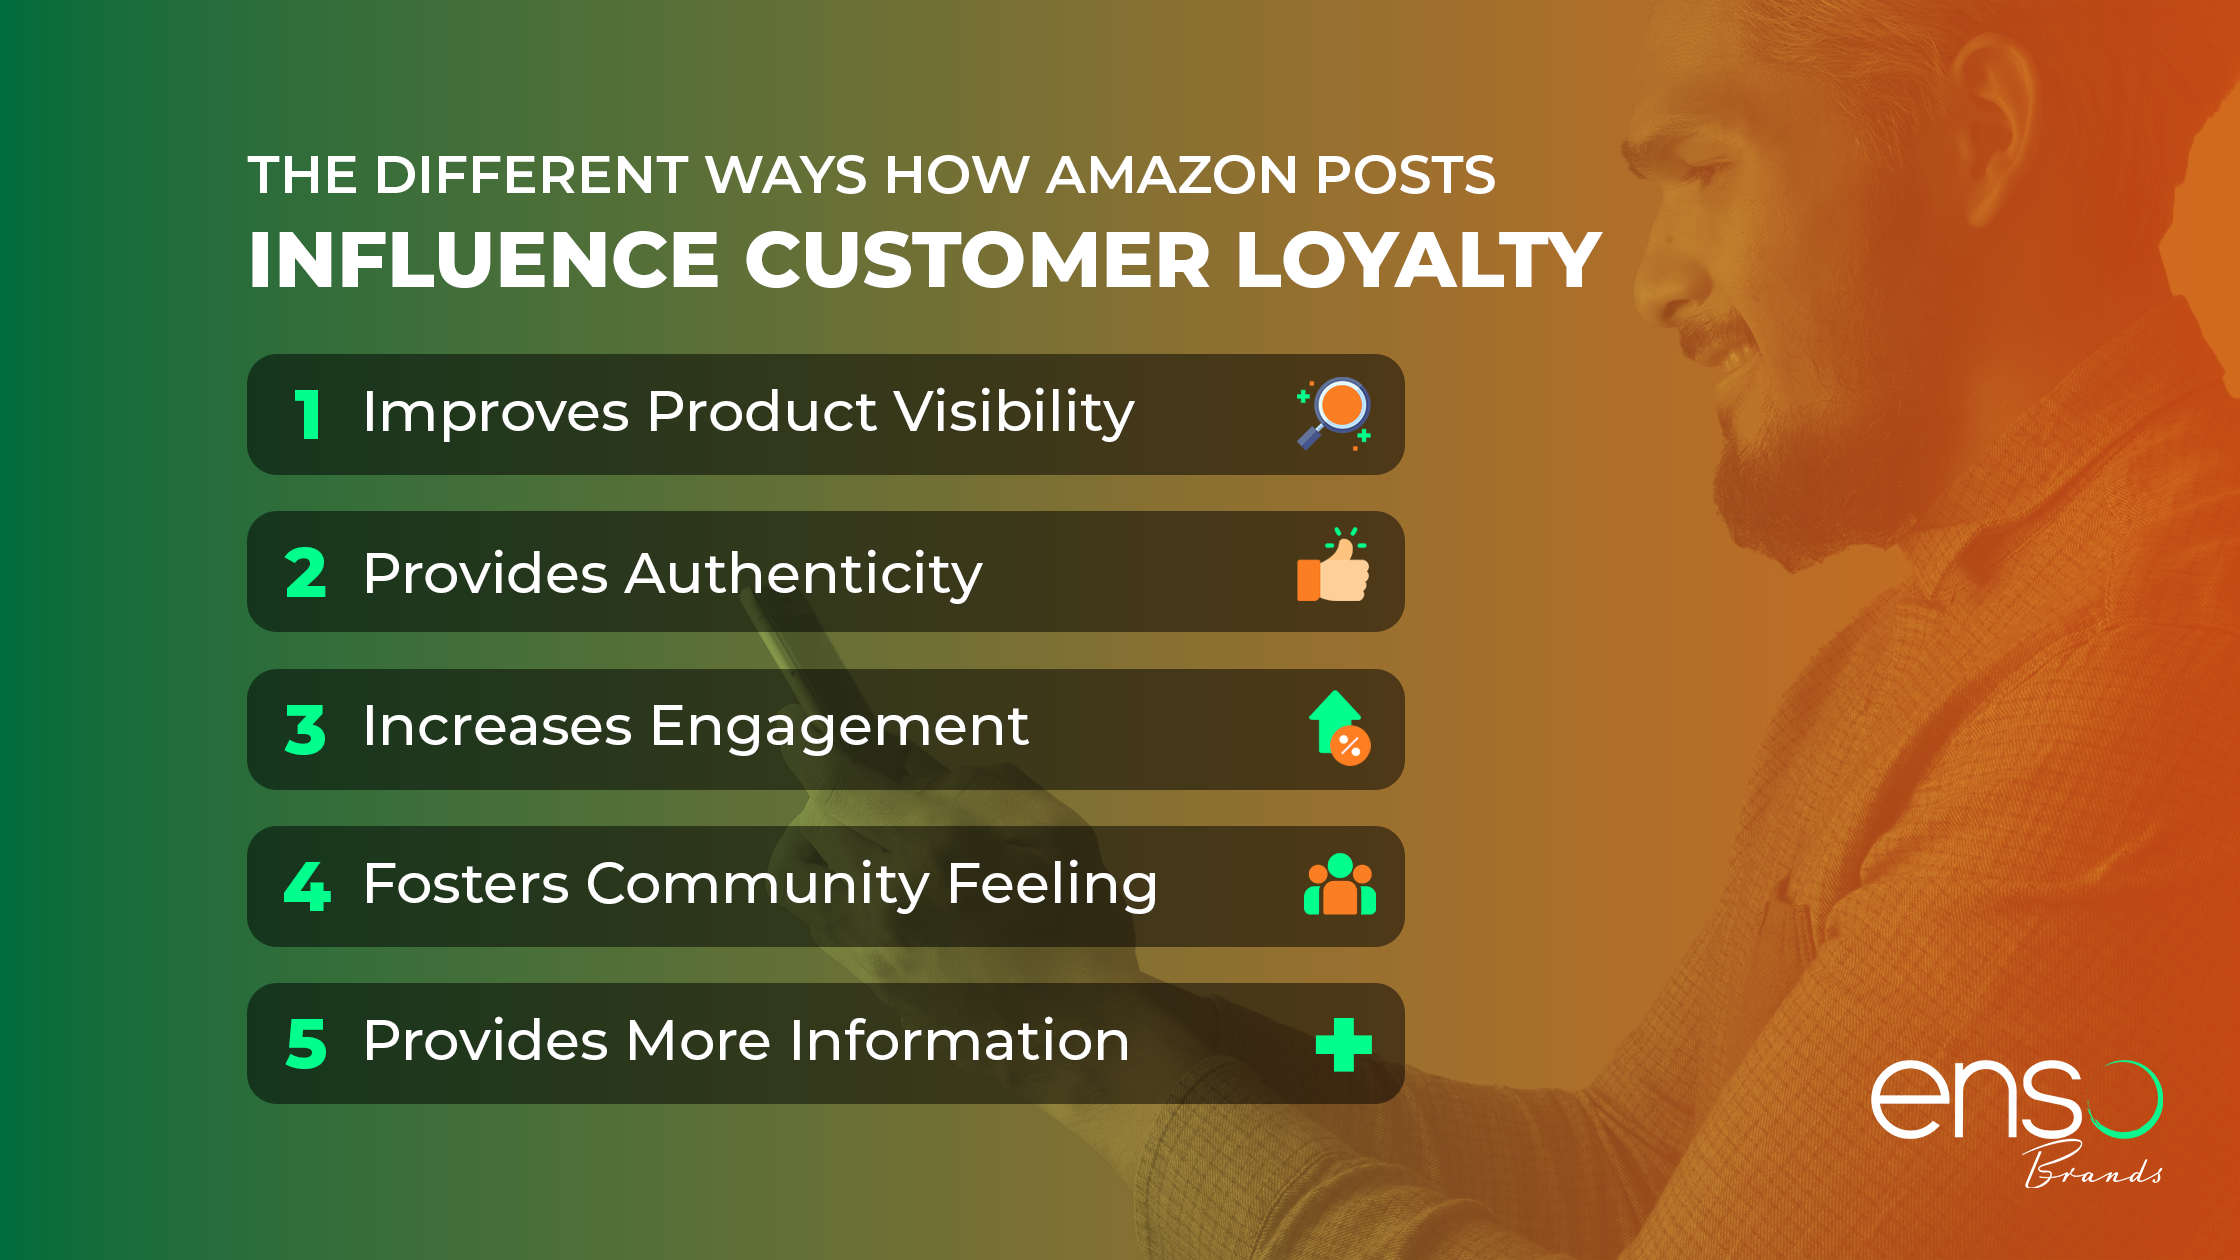 How do Amazon Posts influence customer loyalty